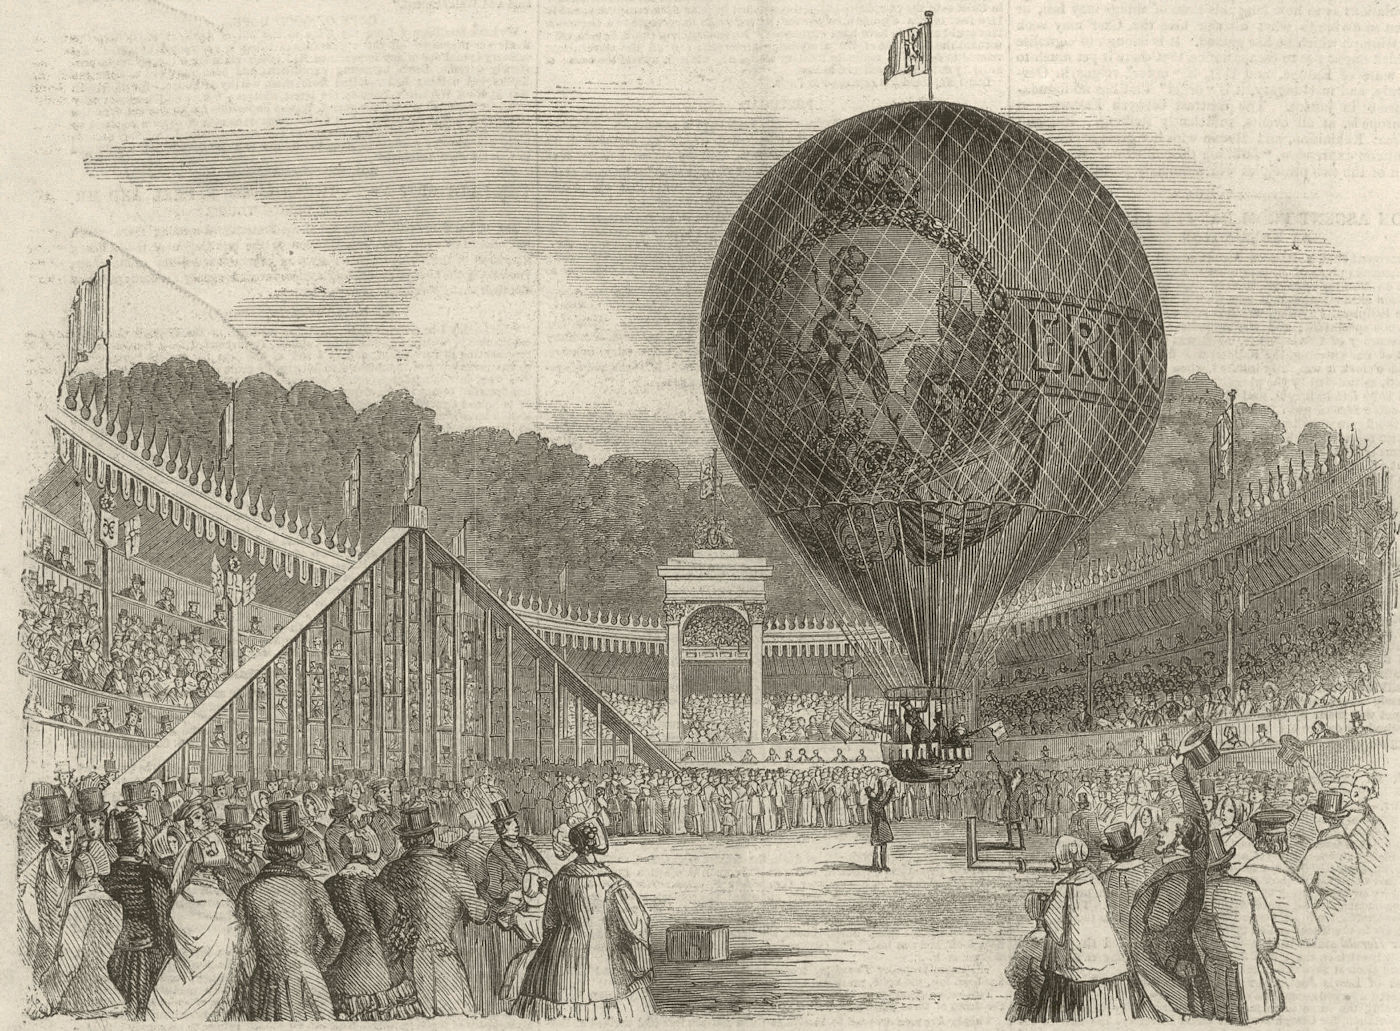 Associate Product Hampton's Egin-Go-Bragh Balloon ascent, Batty's Royal Hippodrome Kensington 1851